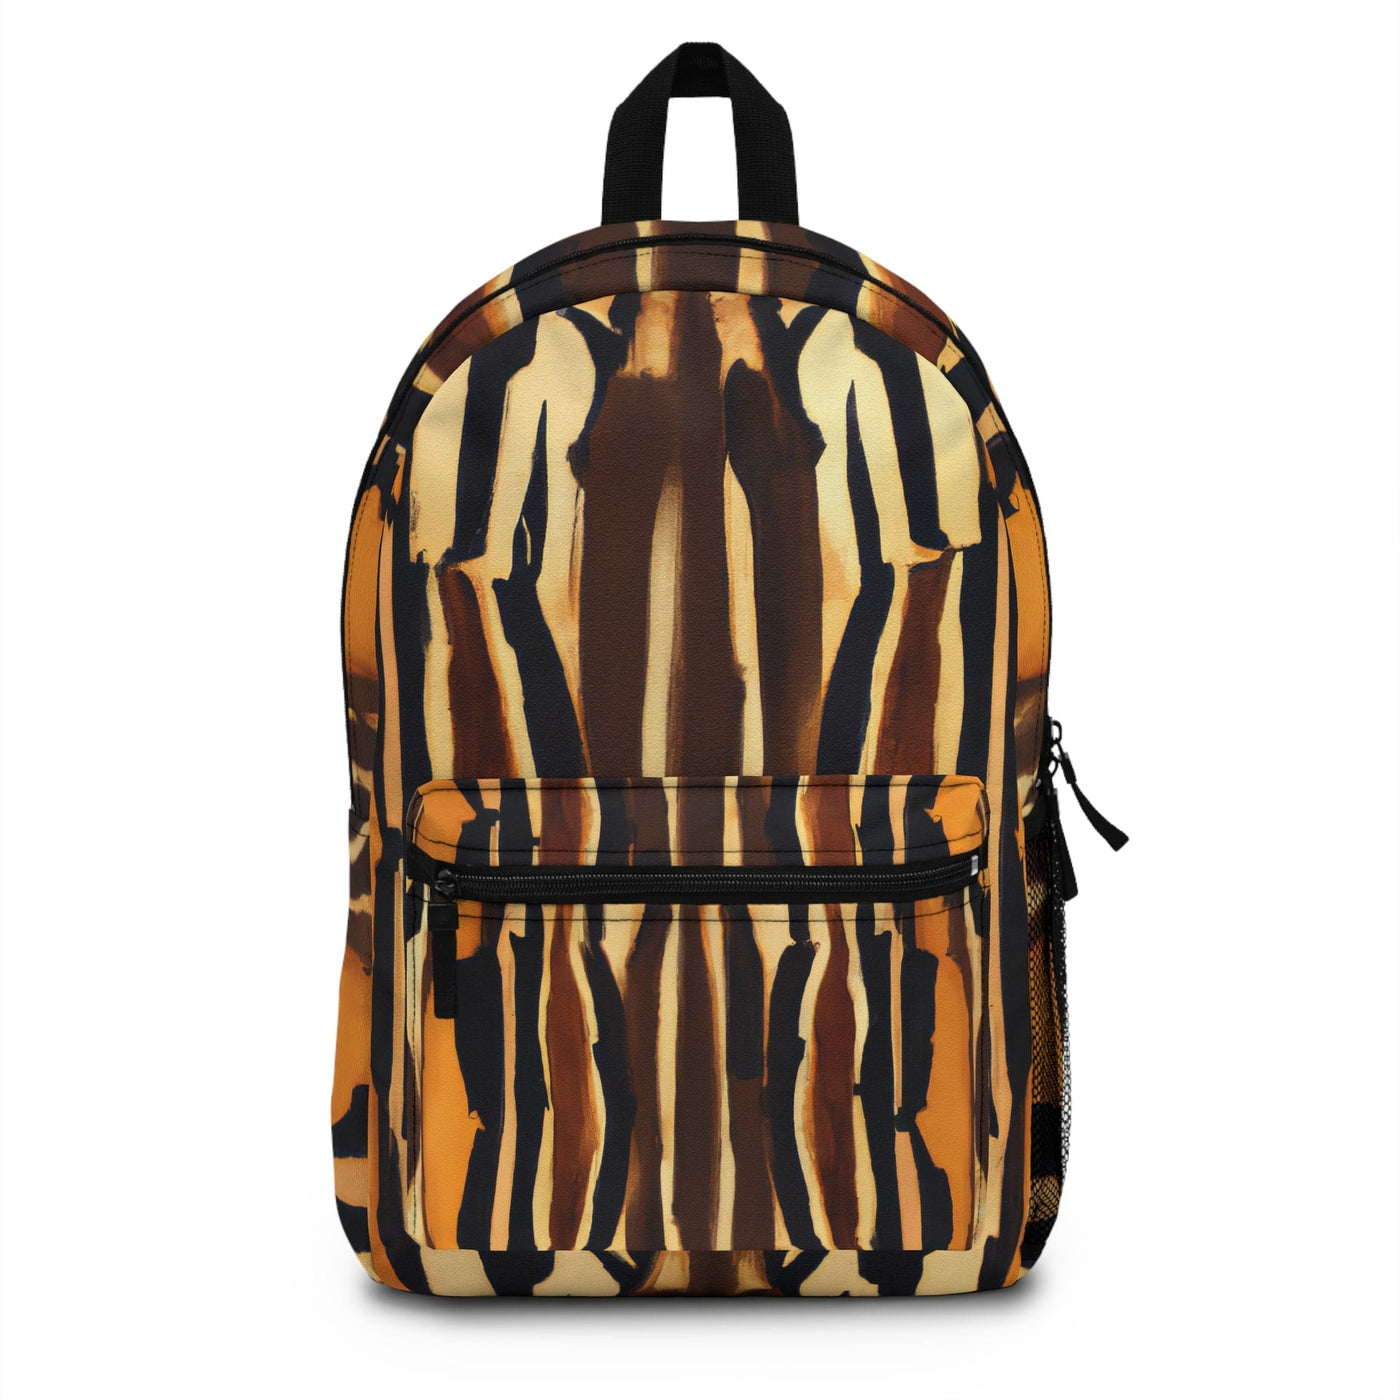 Backpack - Large Water-resistant Bag Zorse Geometric Print Pattern - Bags